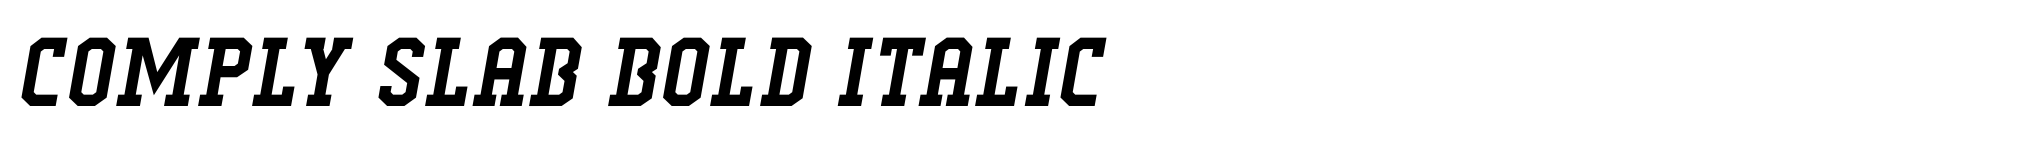 Comply Slab Bold Italic image